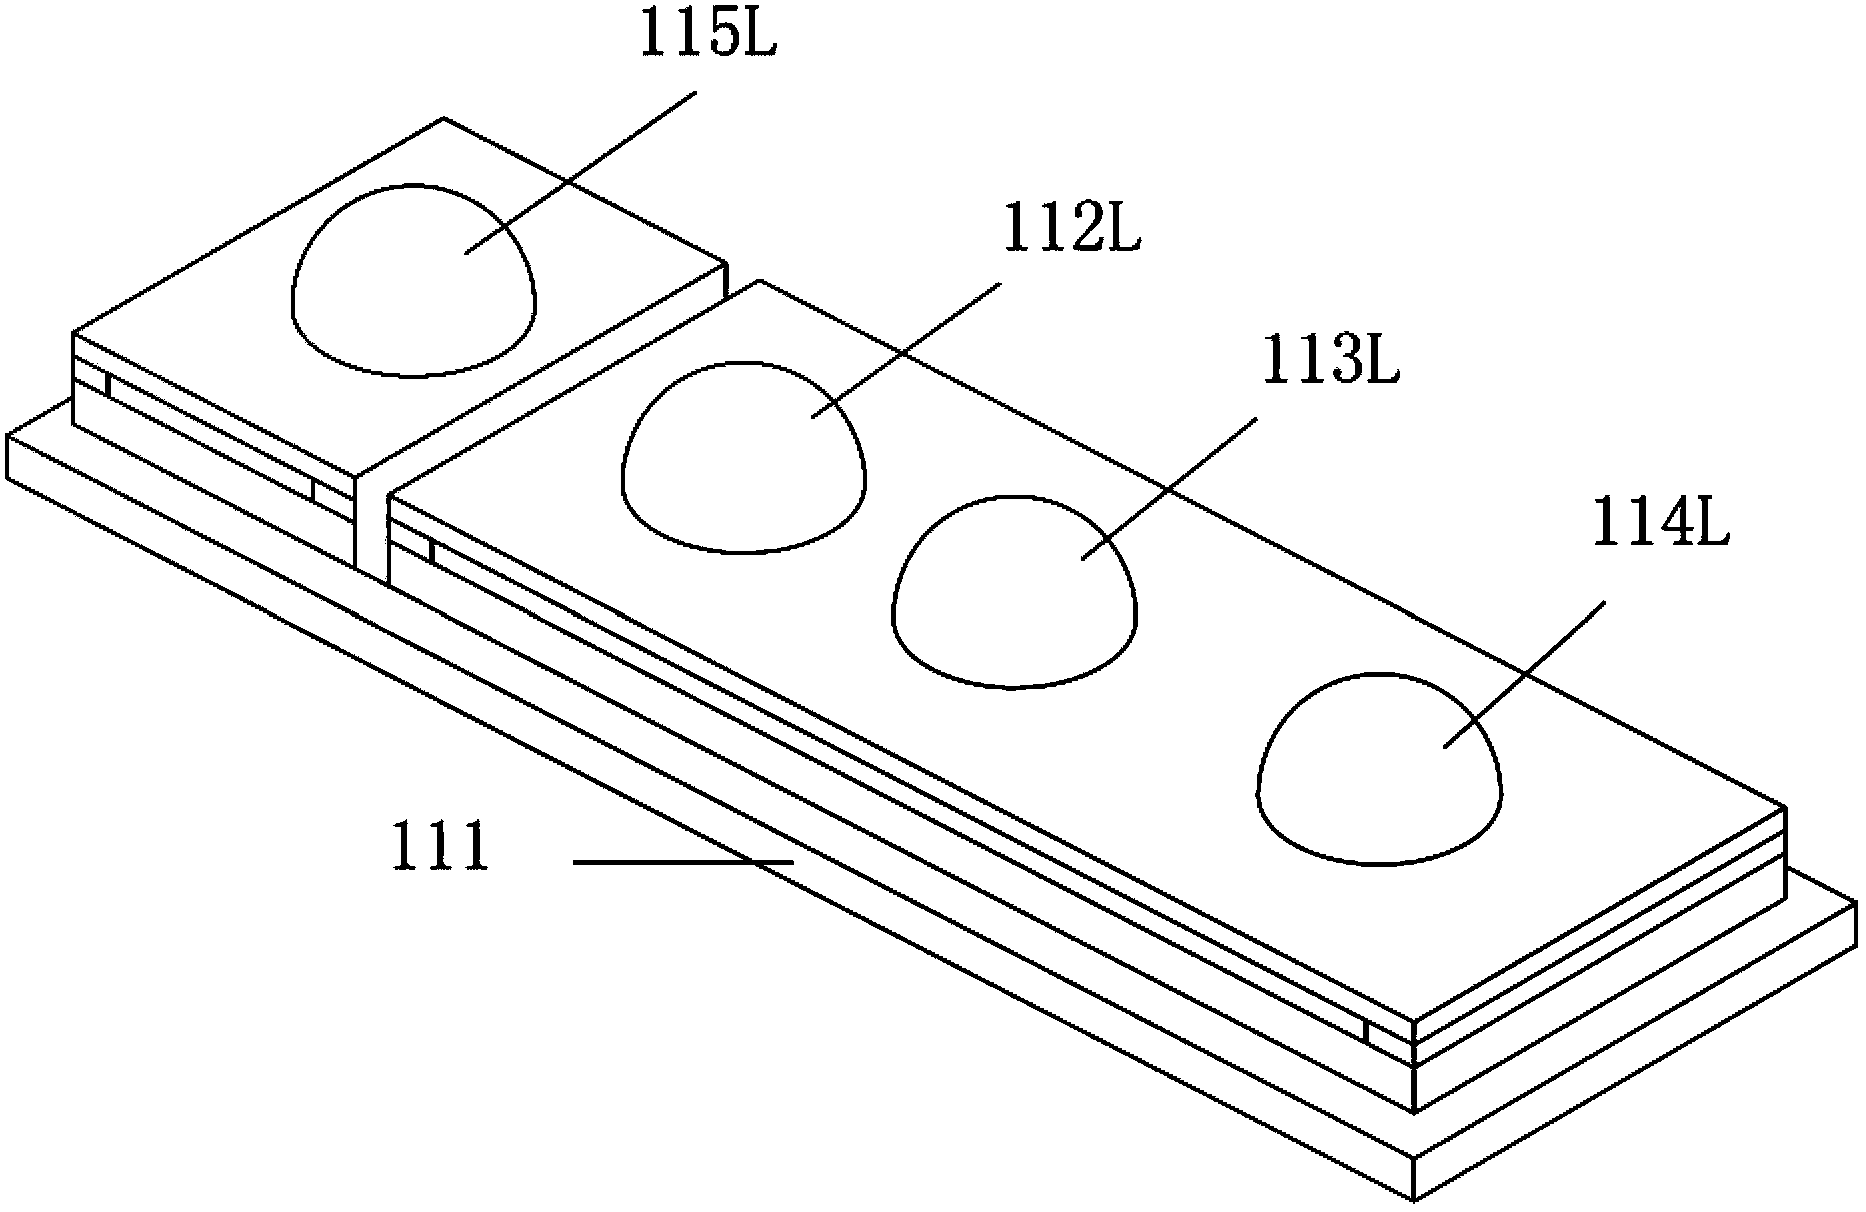 Integrated optical sensor package